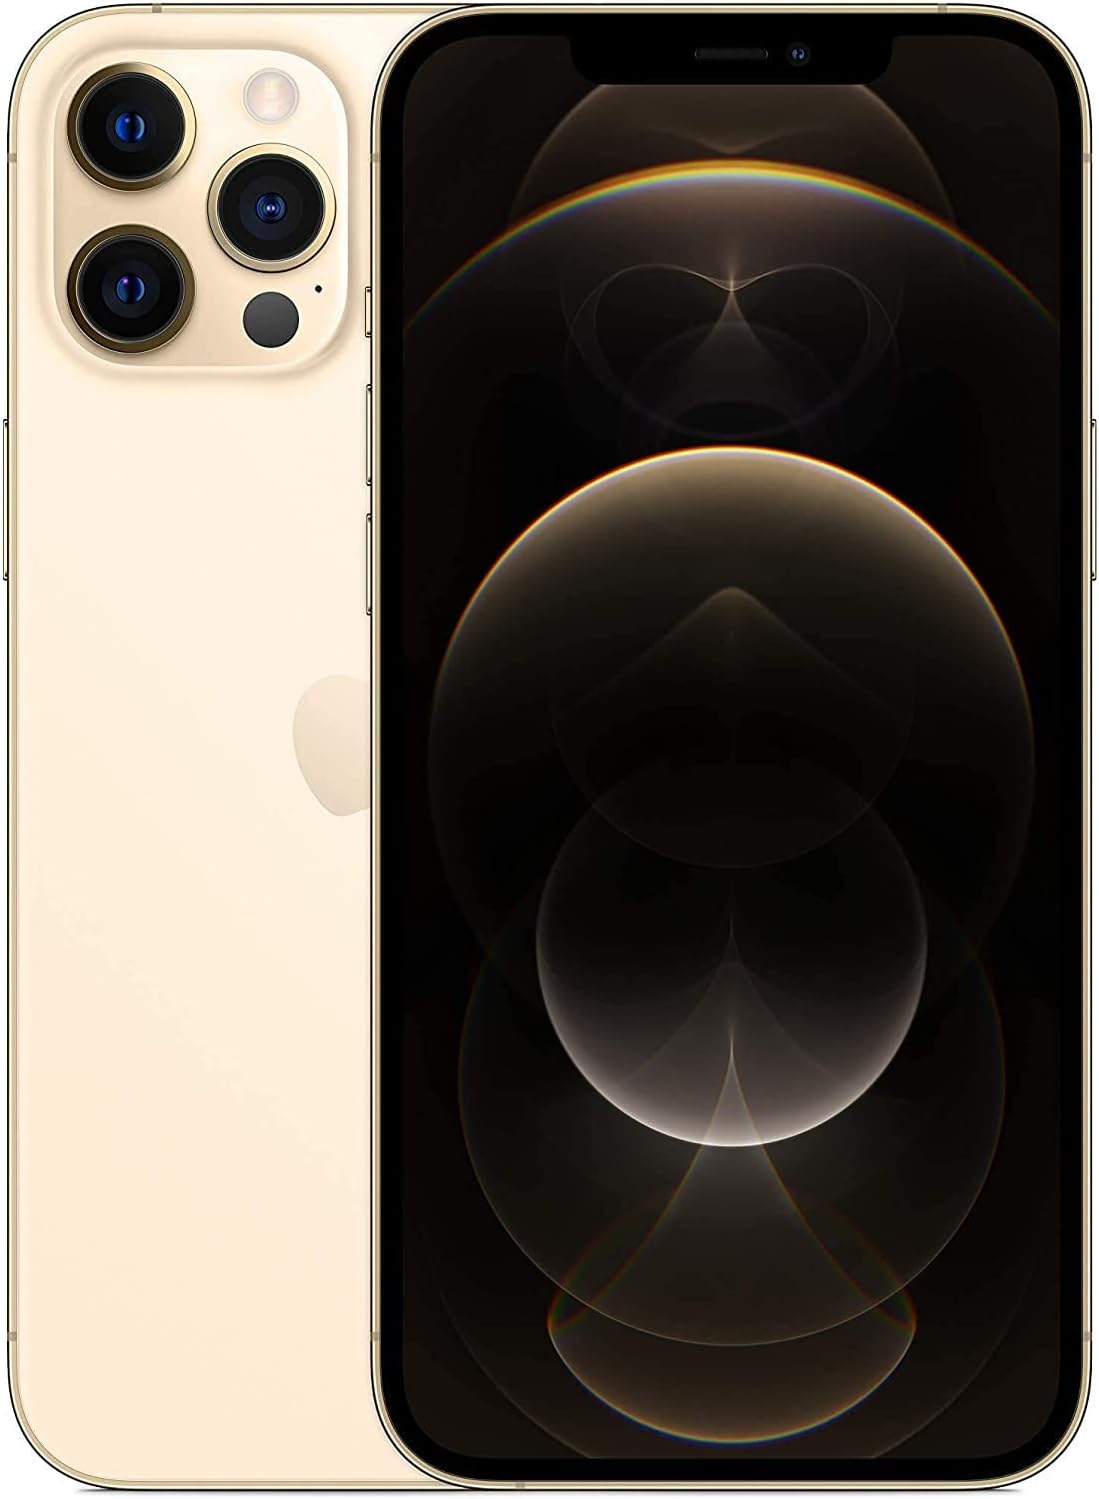  Apple iPhone 12 Pro, 256GB, Silver - Unlocked (Renewed